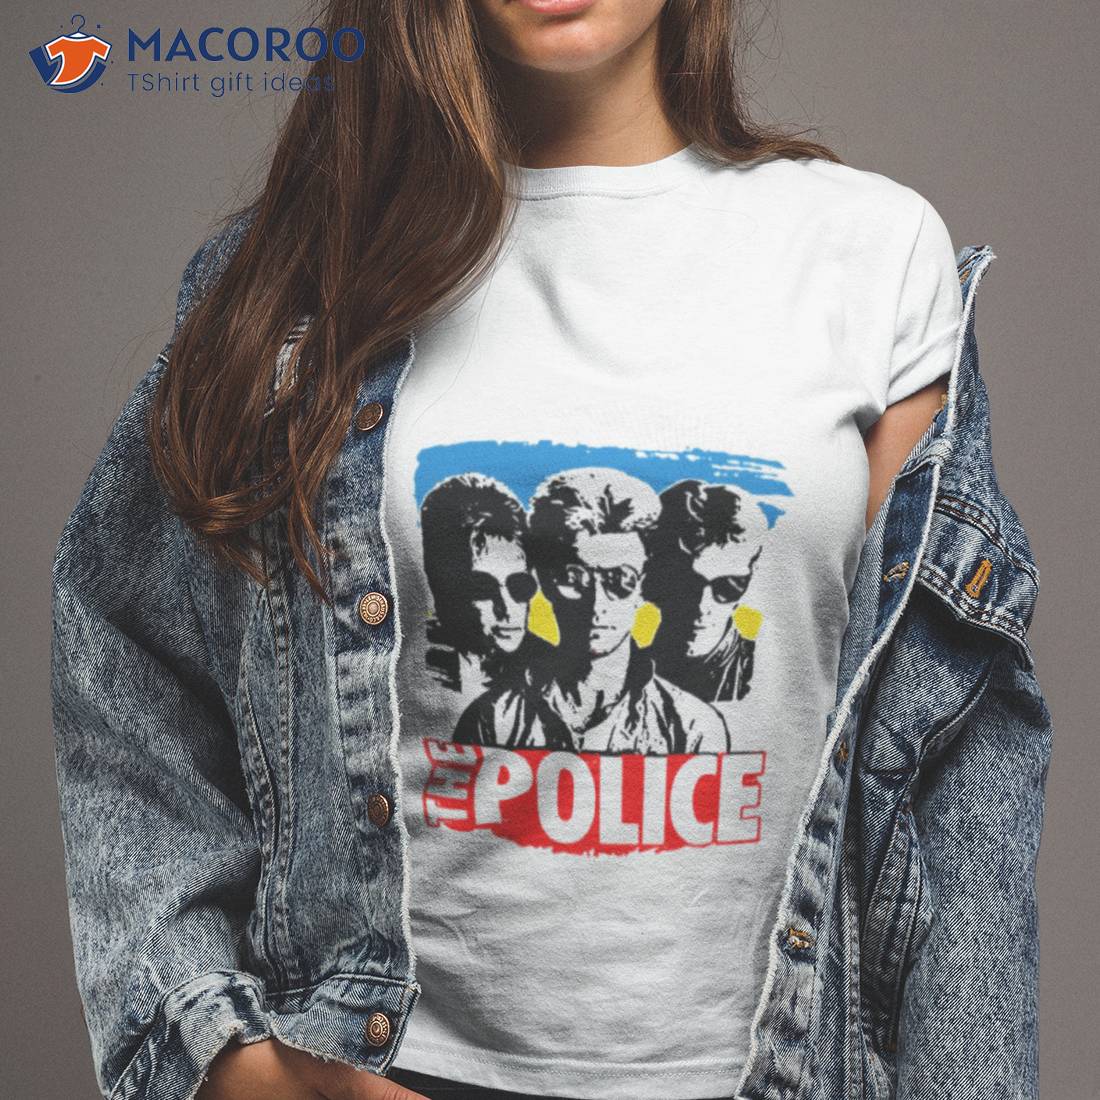 Logo The Police Band Photo Sunglasses Mbois Abiss Shirt Tshirt 2